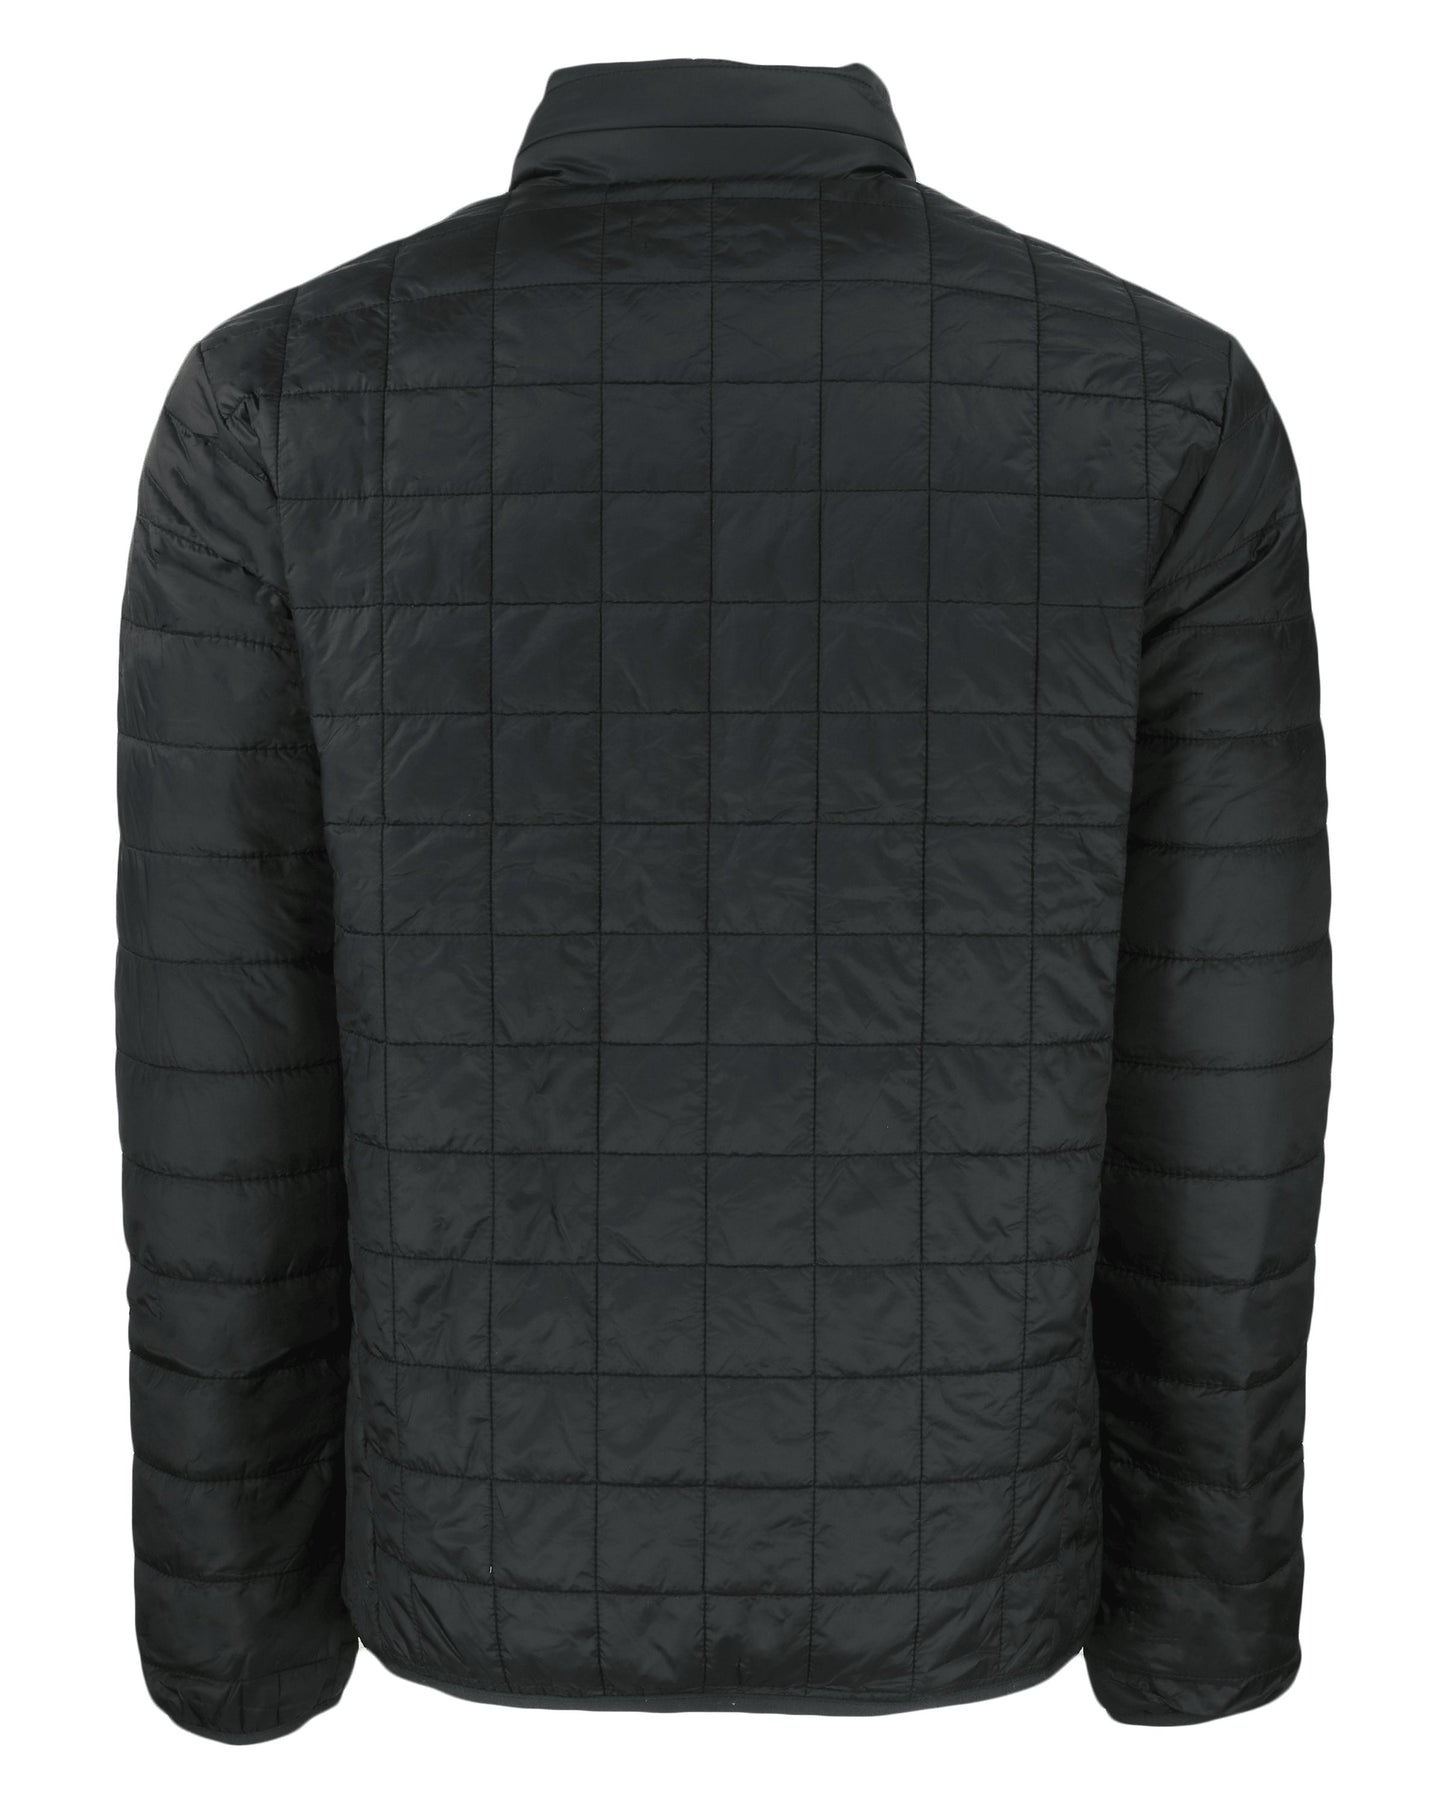 Cutter & Buck Rainier PrimaLoft Eco Insulated Puffer Jacket Black